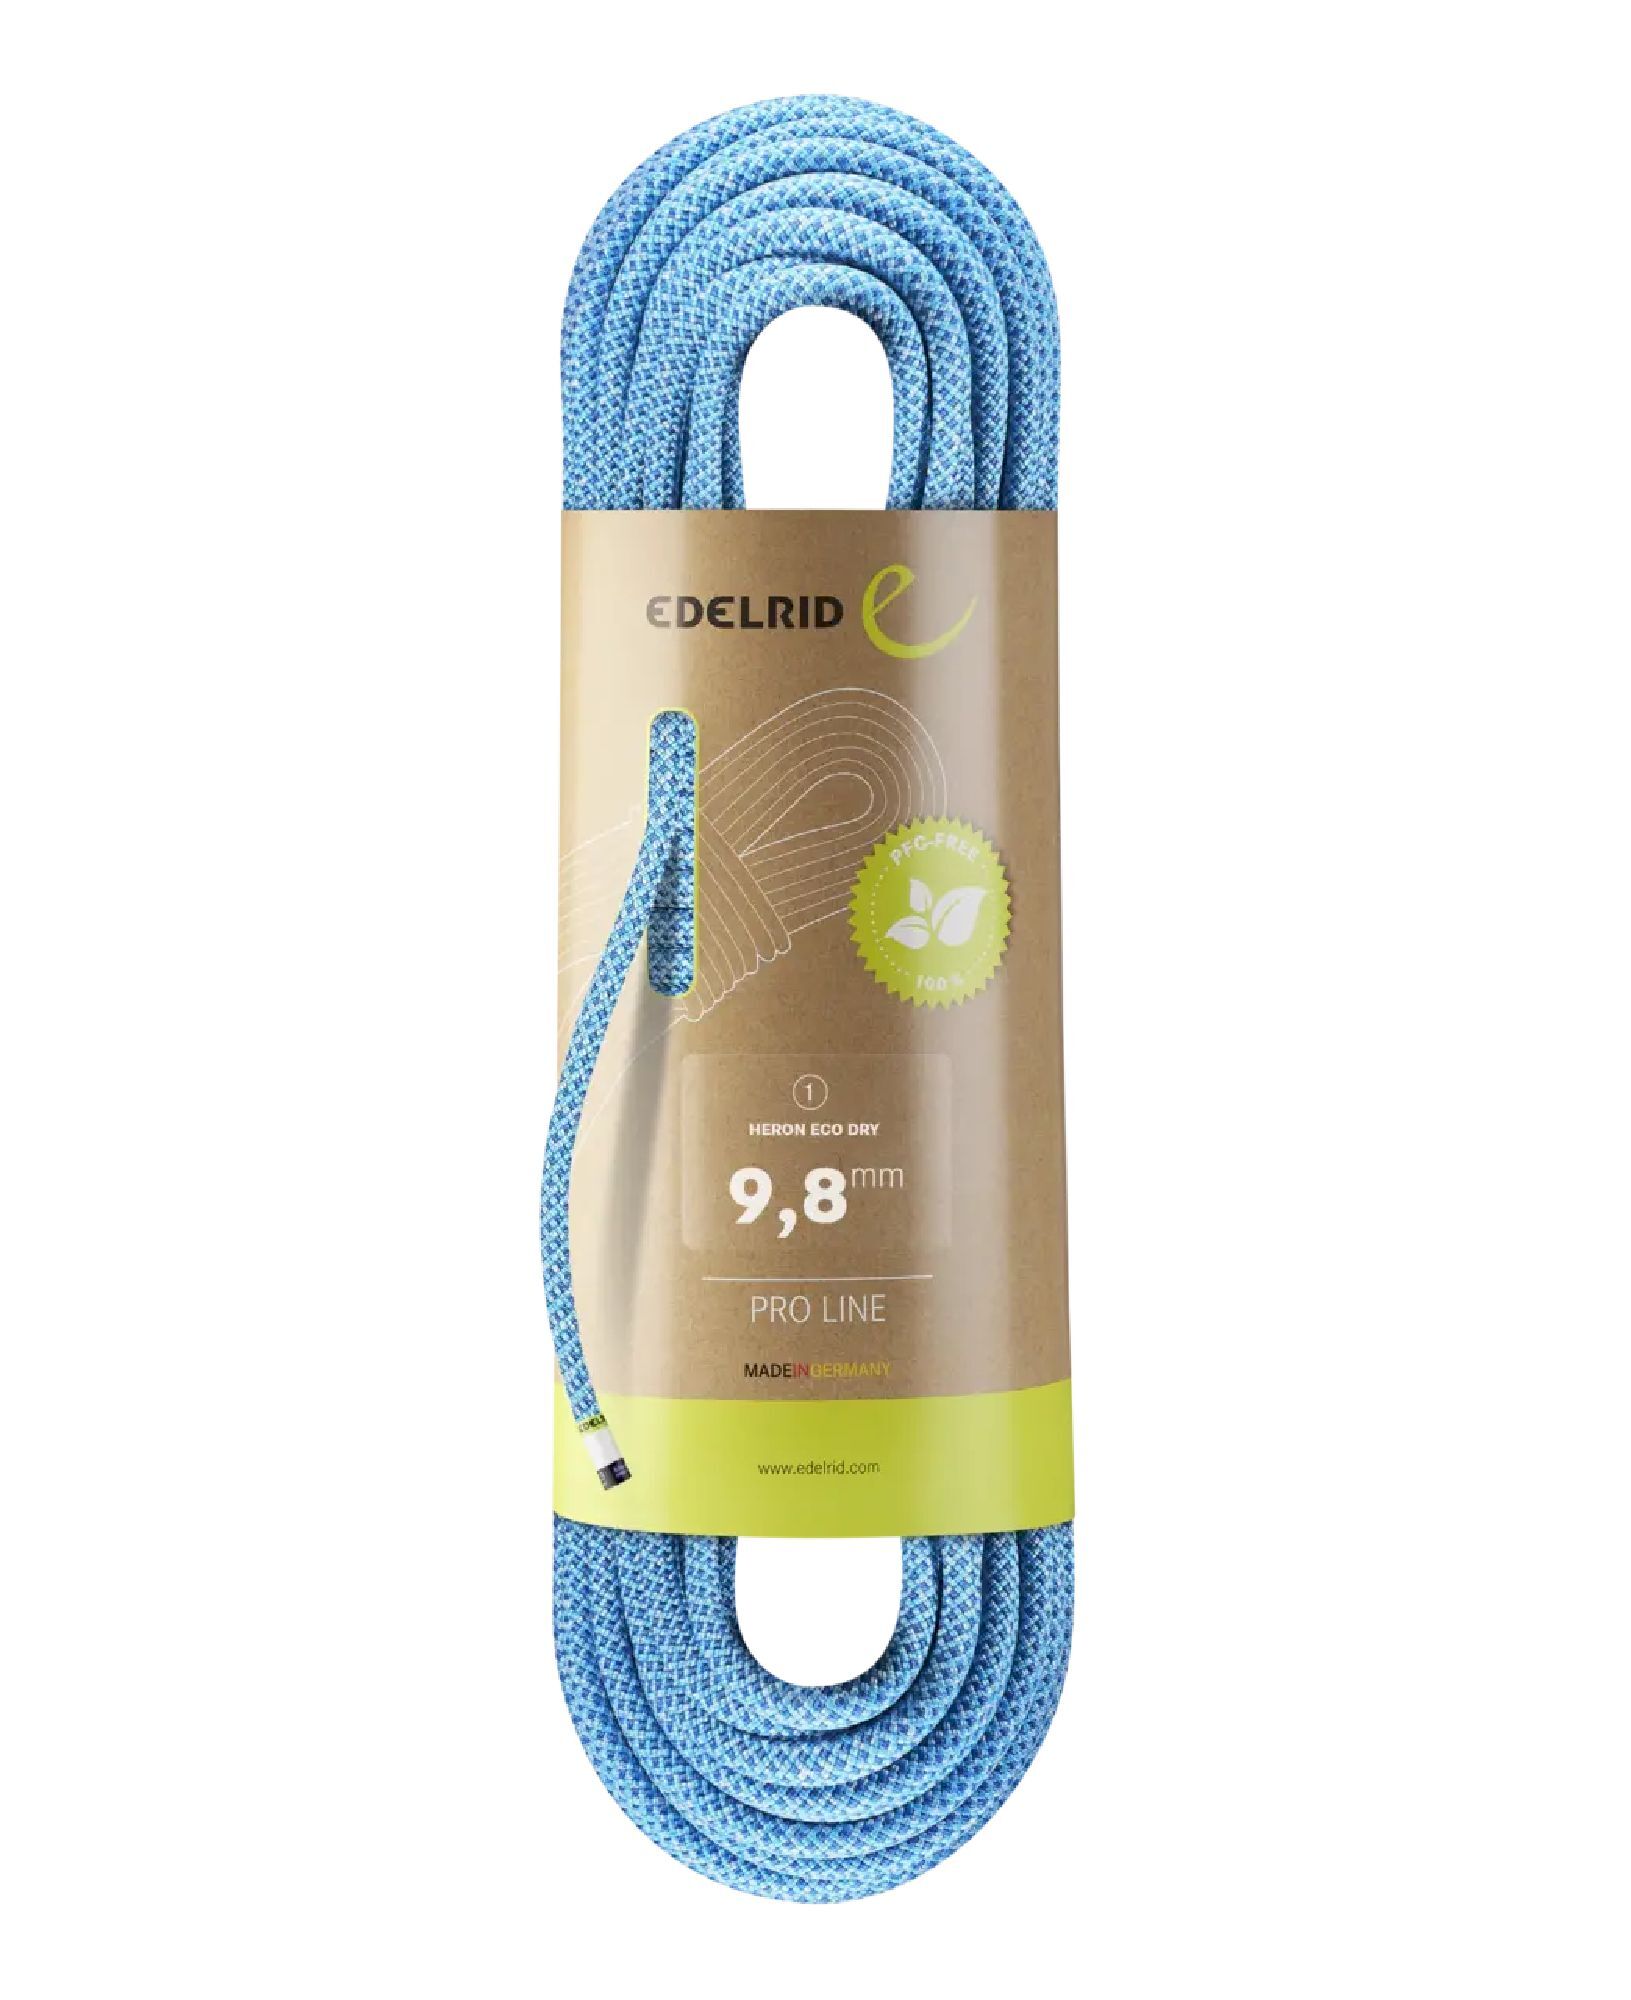 Edelrid Heron Eco Dry 9,8 mm - Climbing rope